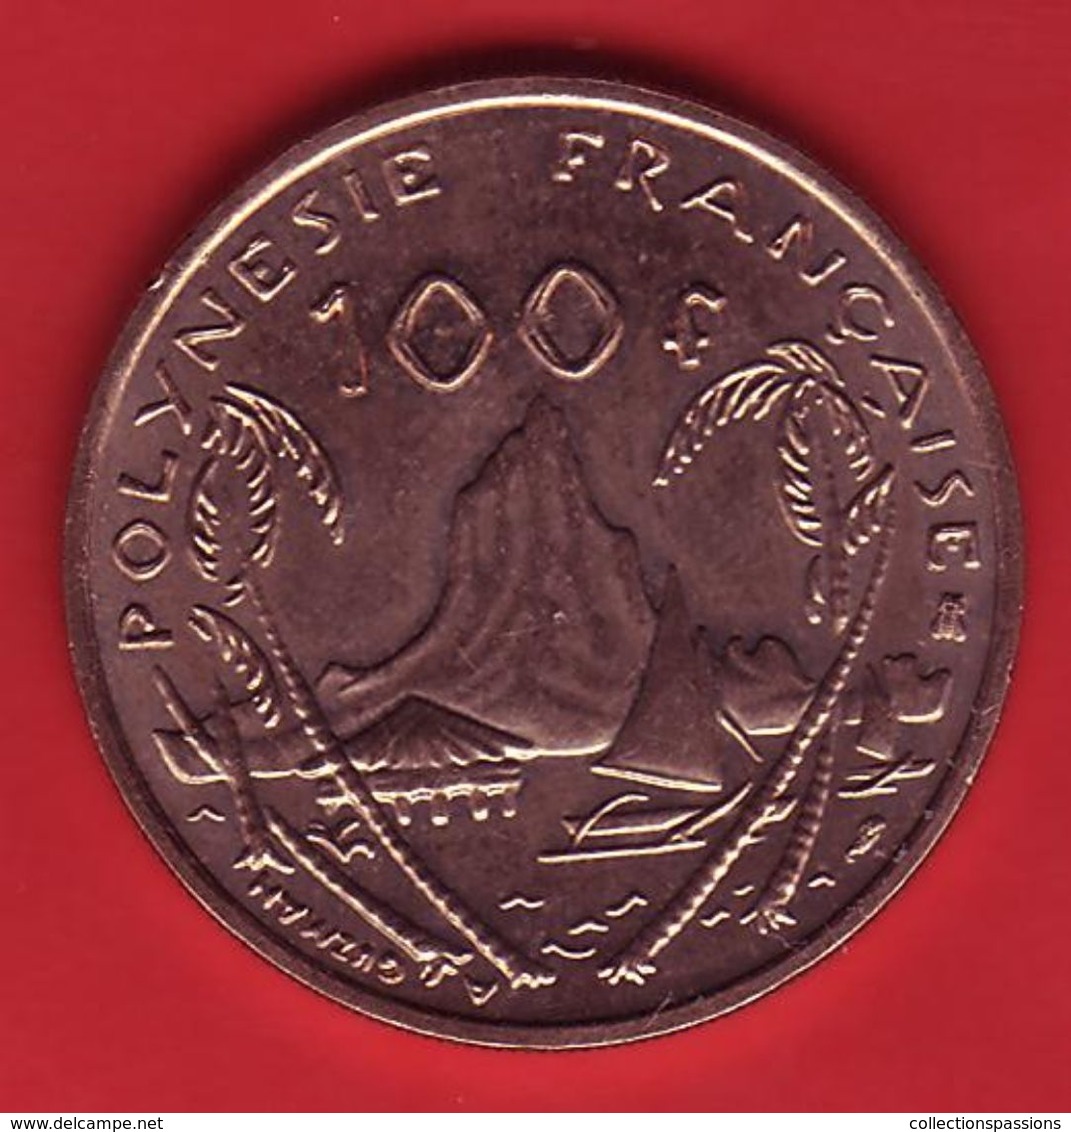 - POLYNESIE FRANCAISE - 100 Francs - 1995 - - Polynésie Française